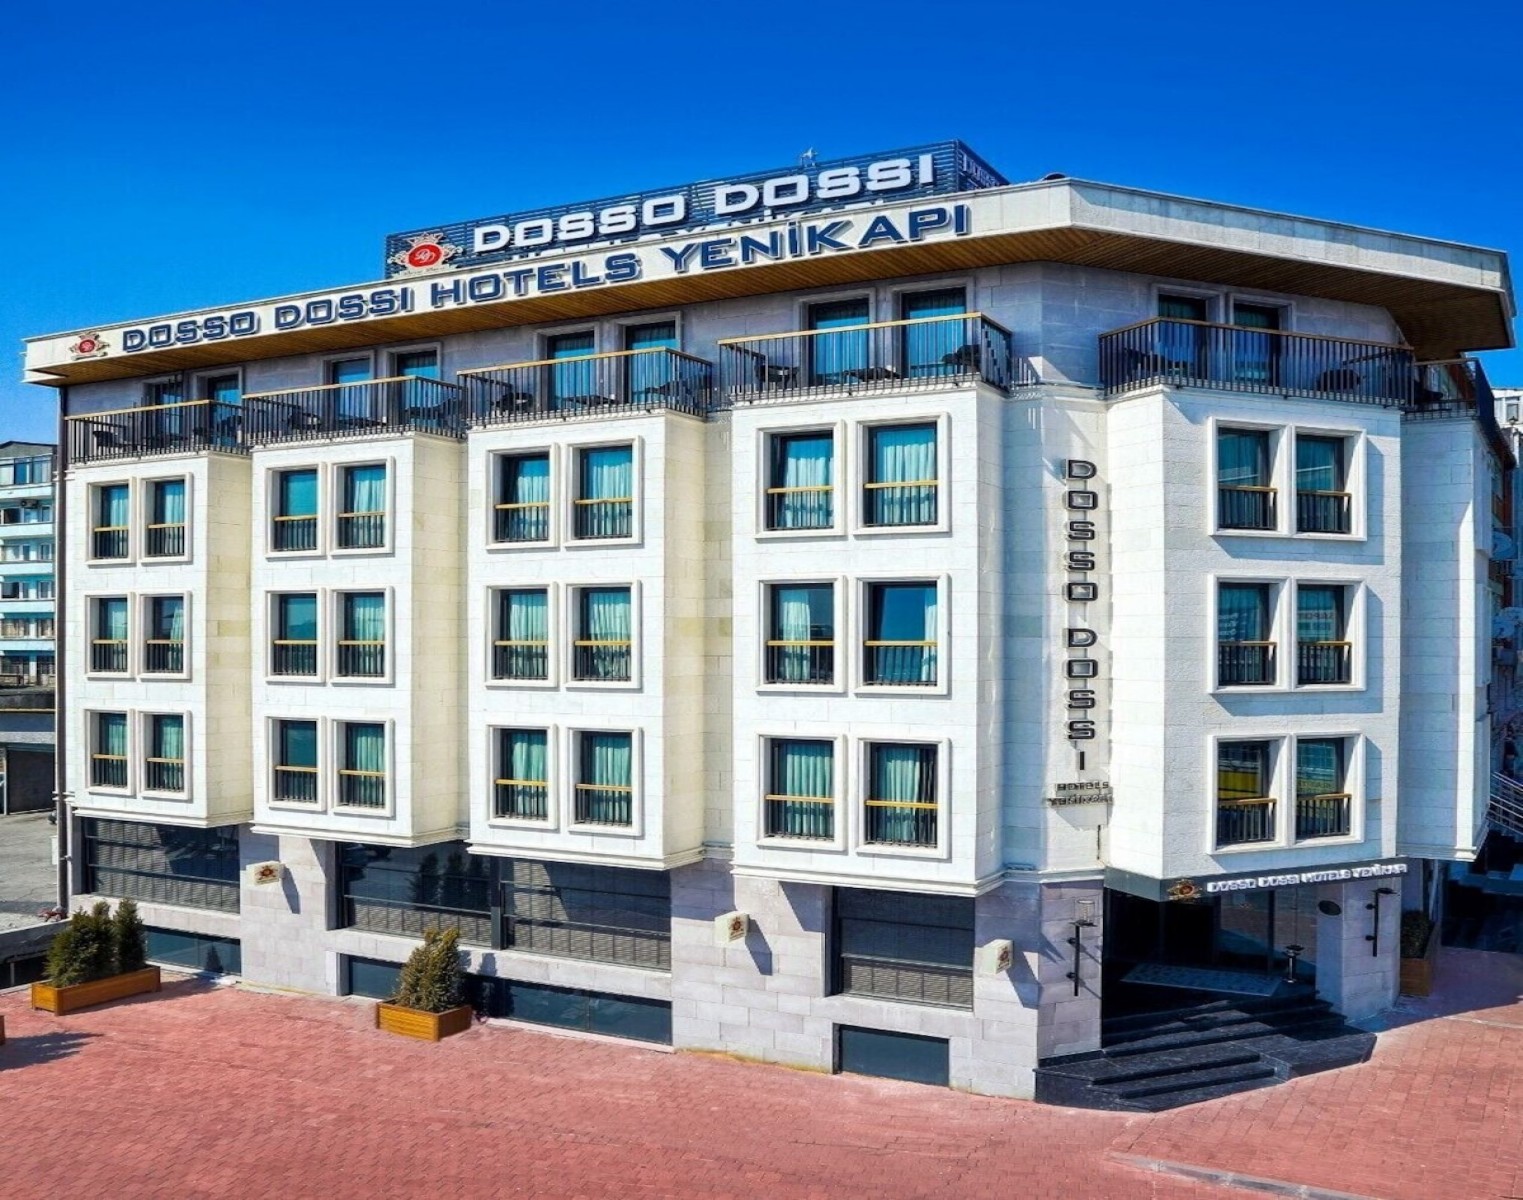 Dosso Dossi Hotels Yenikapı 